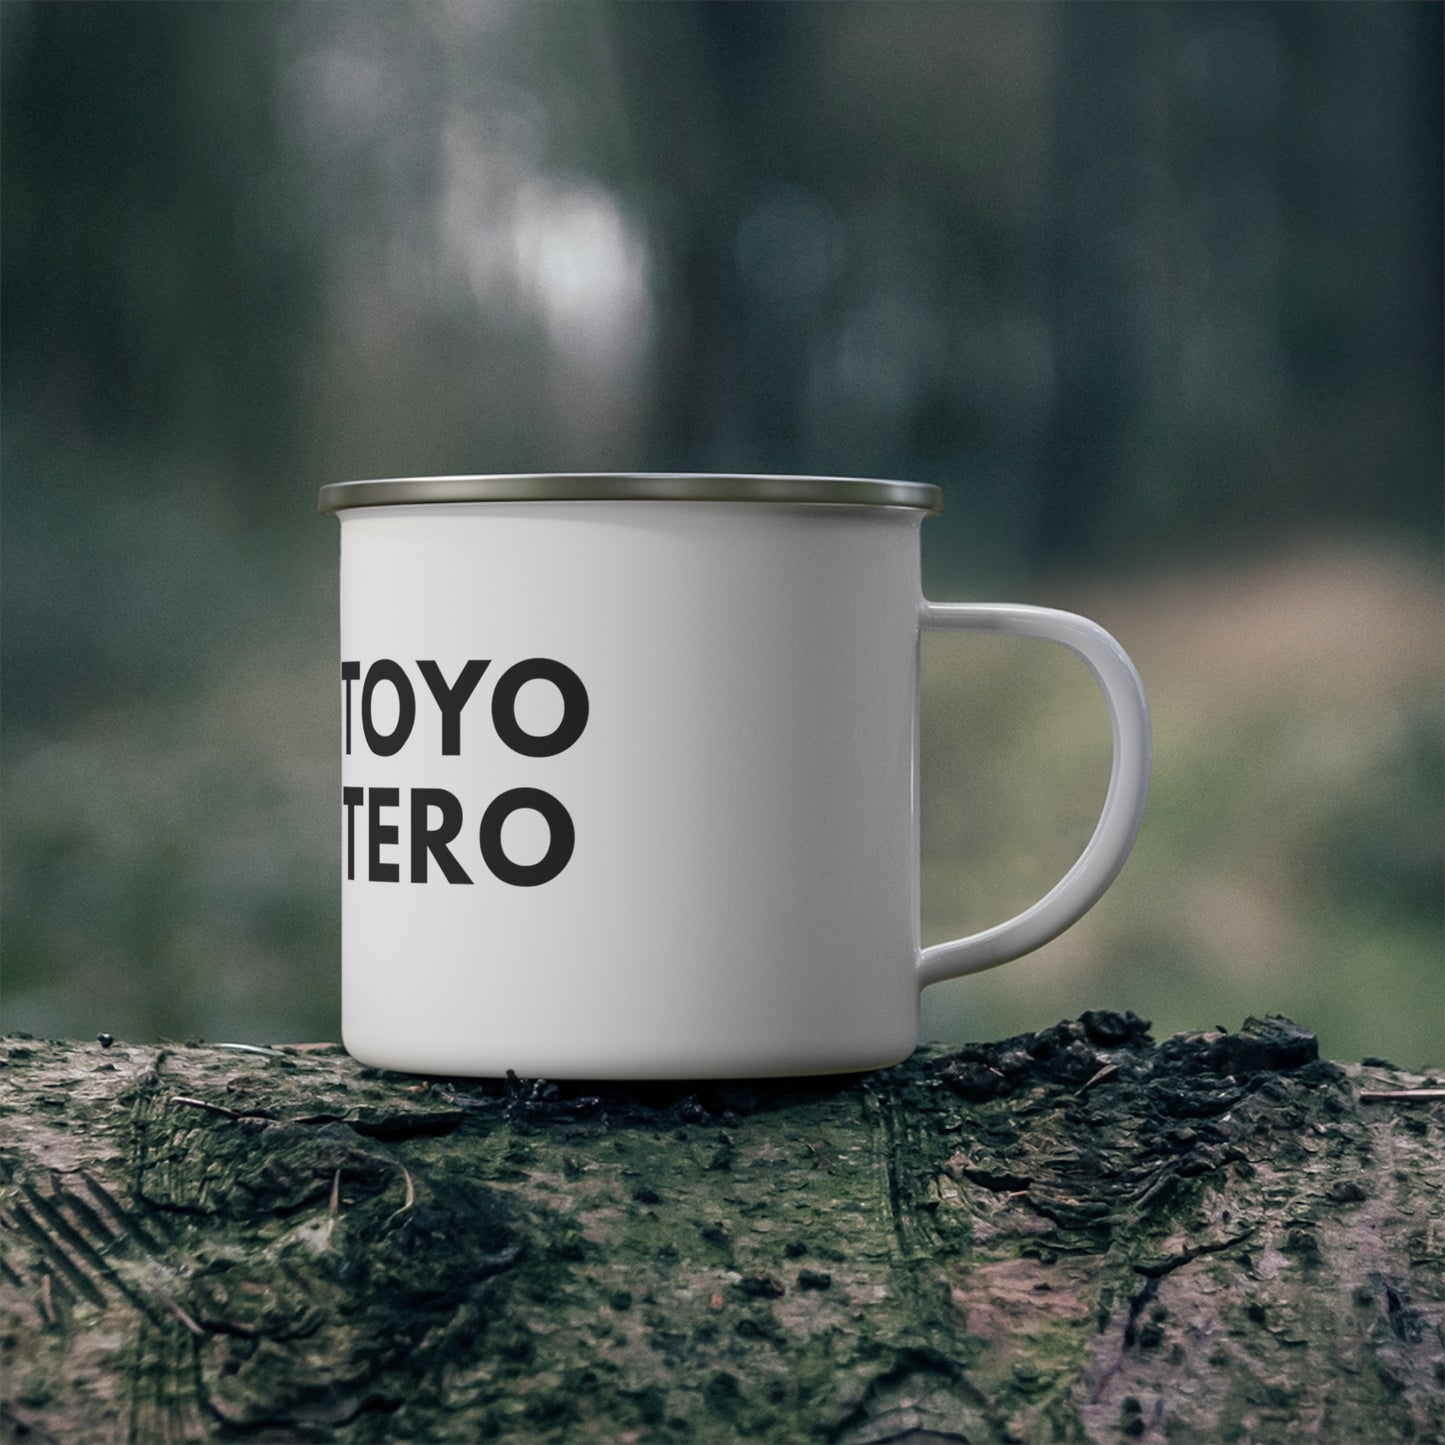 Toyotero Camping Mug 2